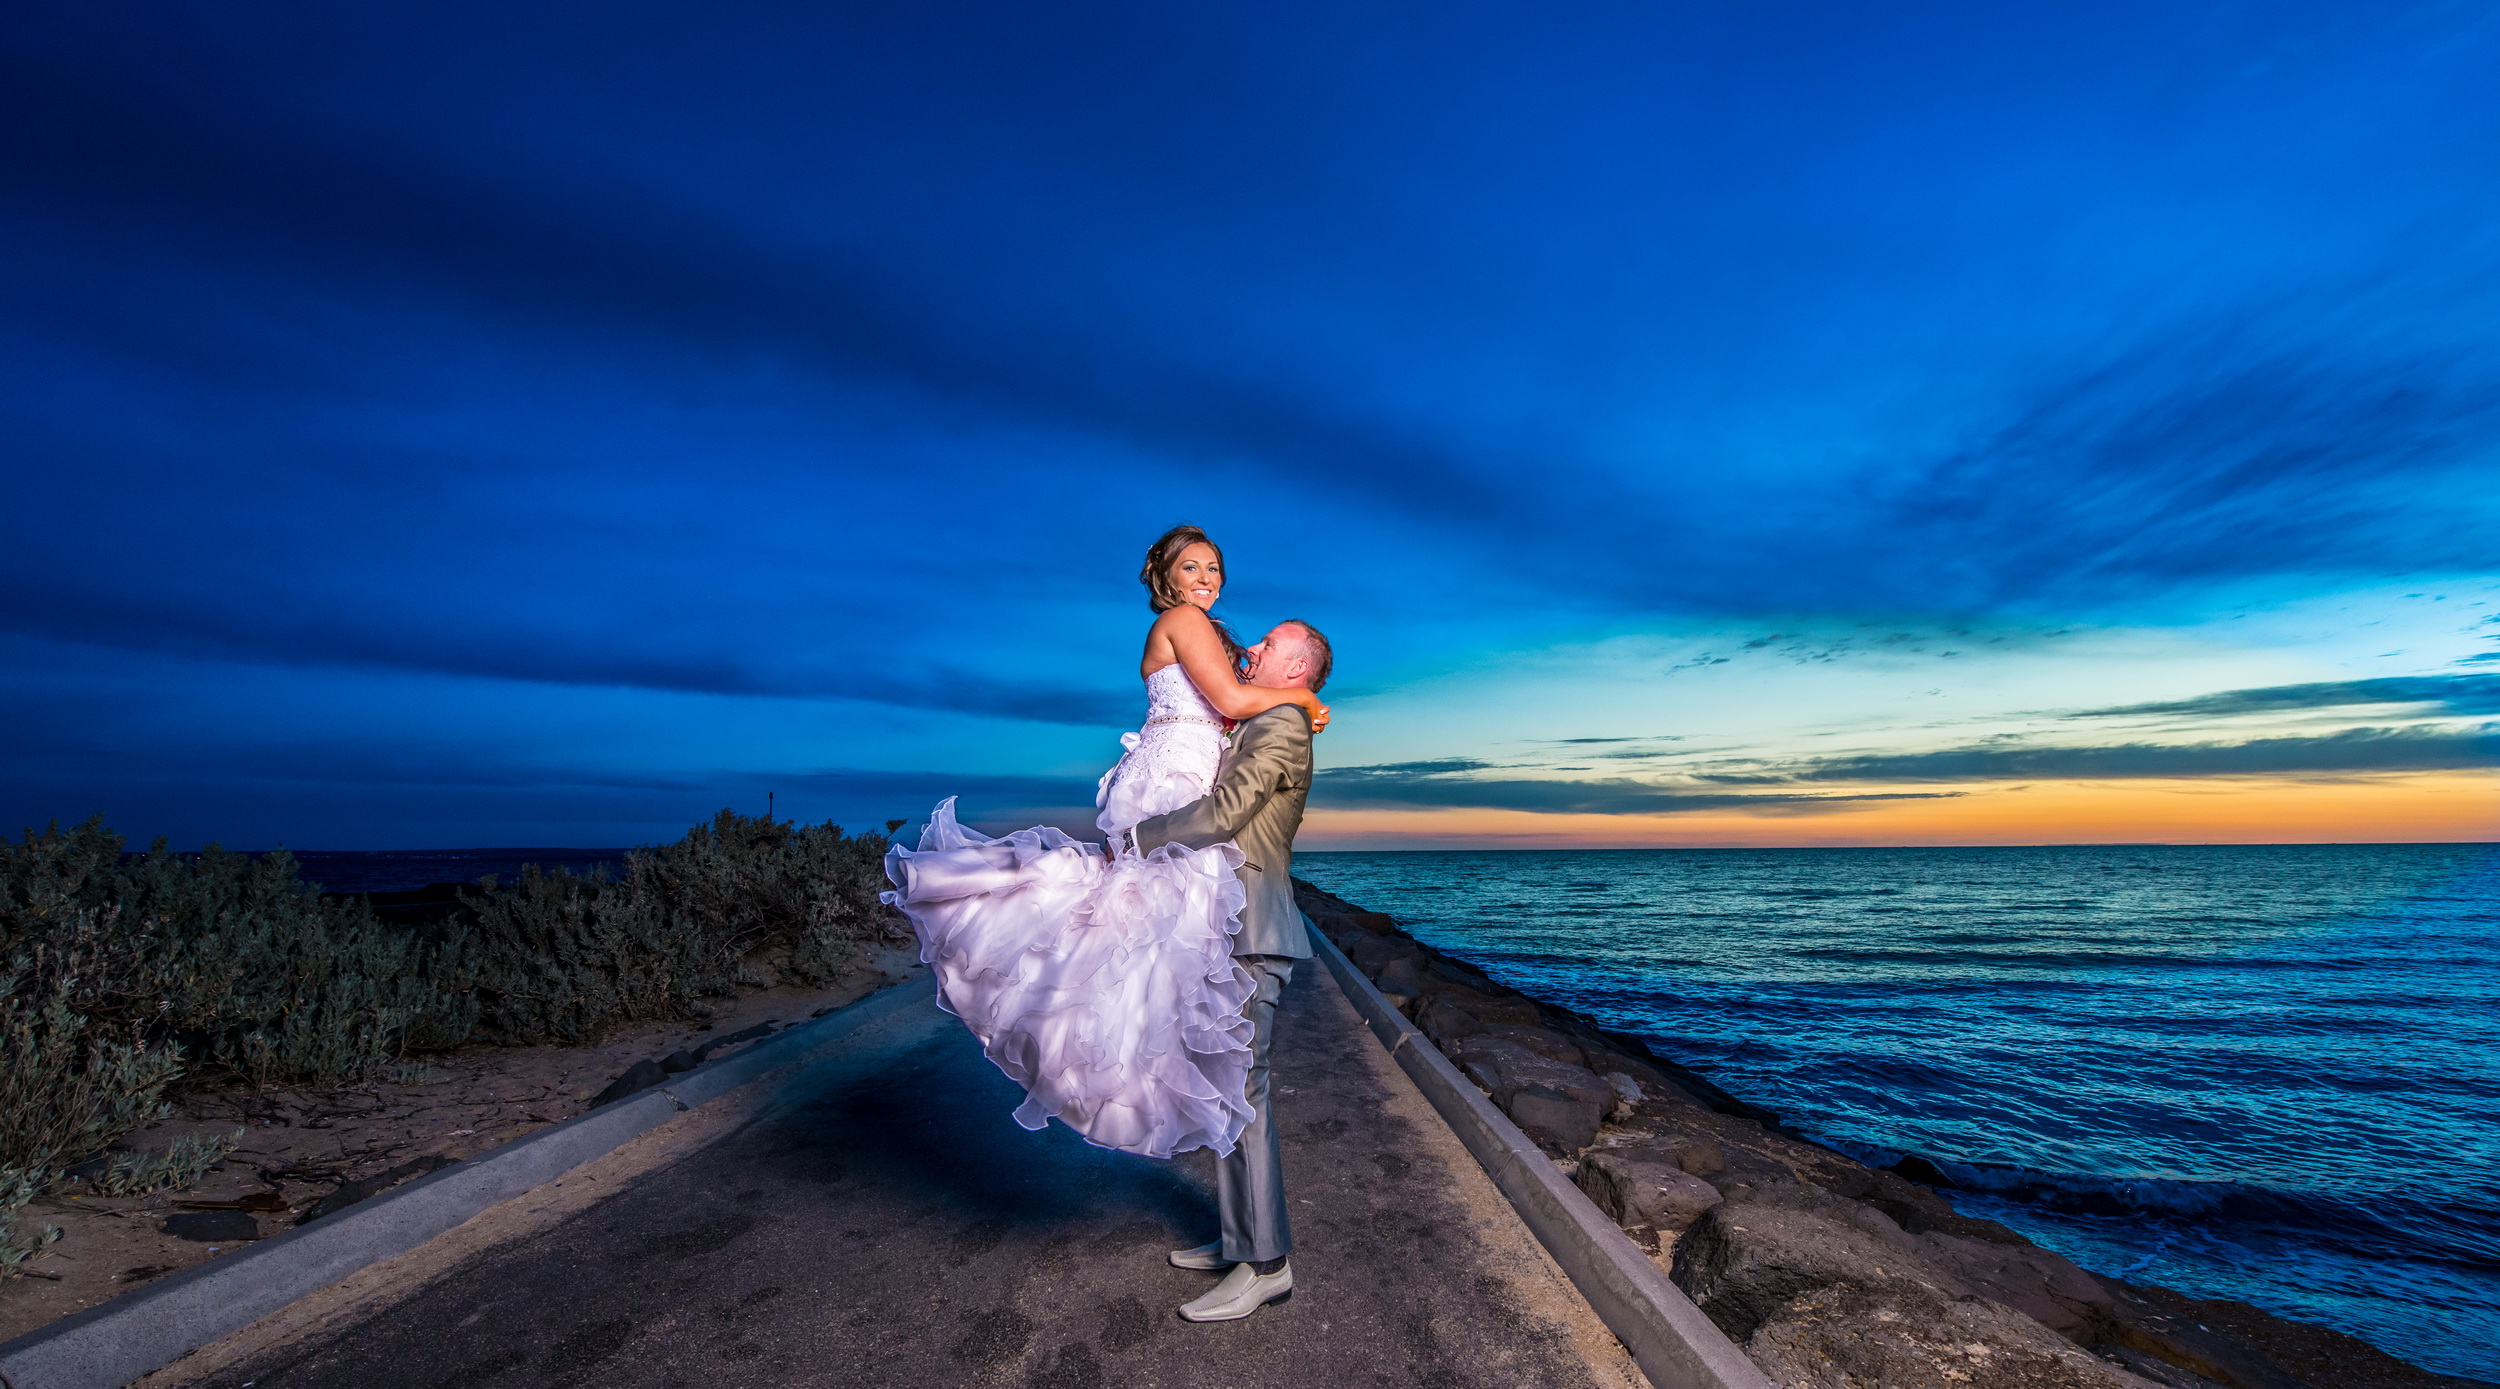 Best Wedding Photographer Melbourne services 20 20  MORDIALLOC+Melbourne+beach+Wedding+Photographer